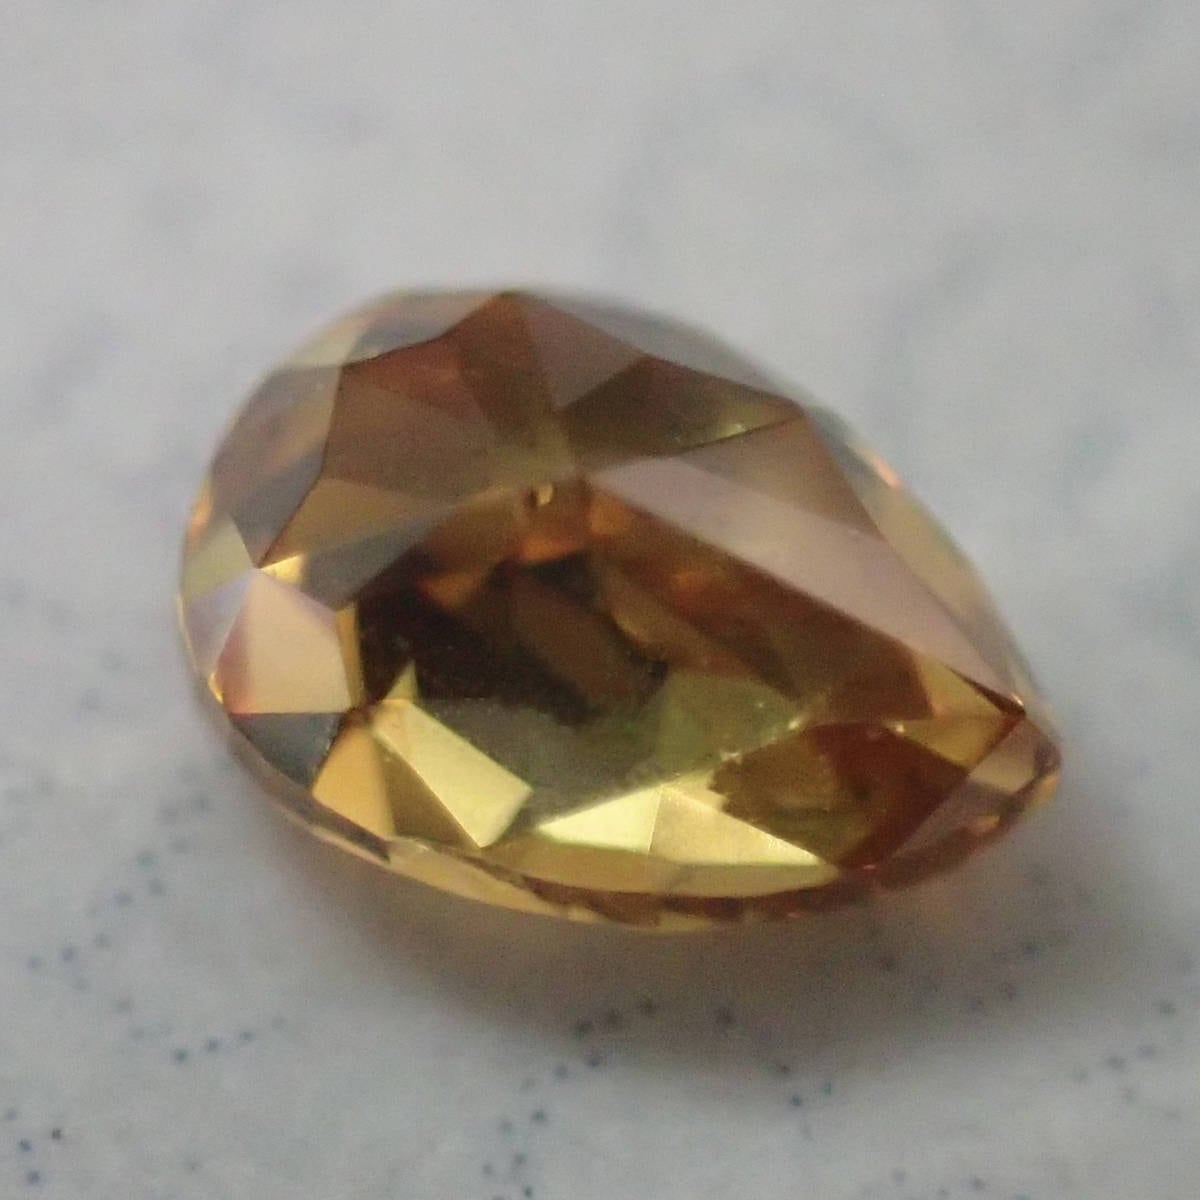 0.169ct カラーダイヤモンド FDBOY ダイヤモンドルース ペアシェイプ